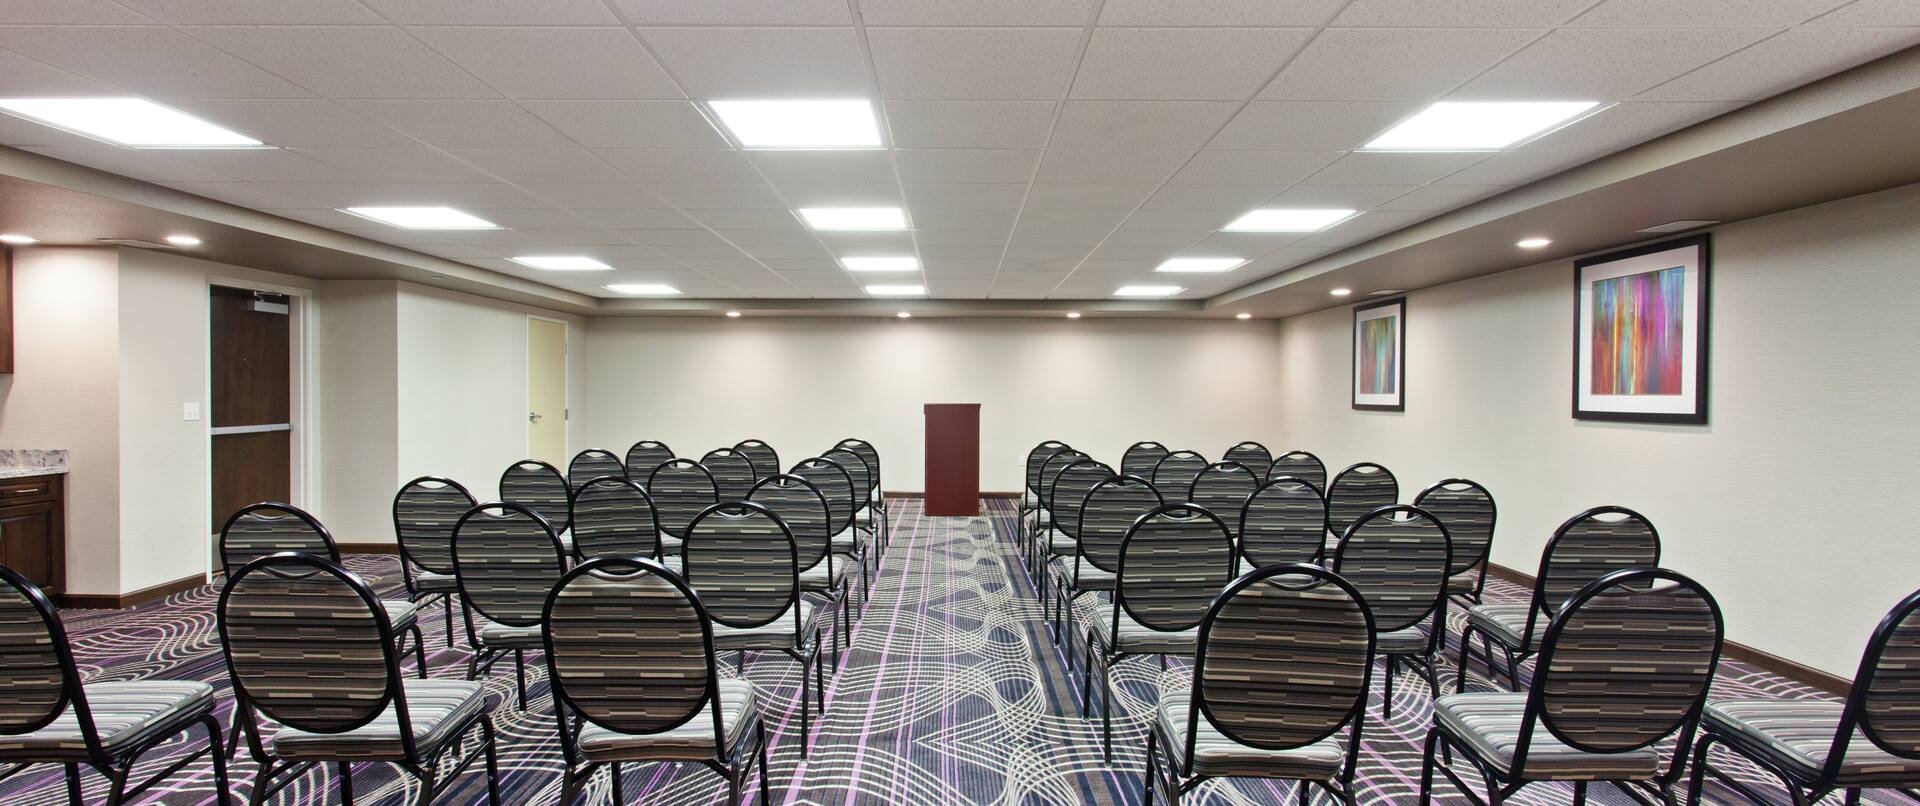 Meeting Room with Auditorium Seating Setup